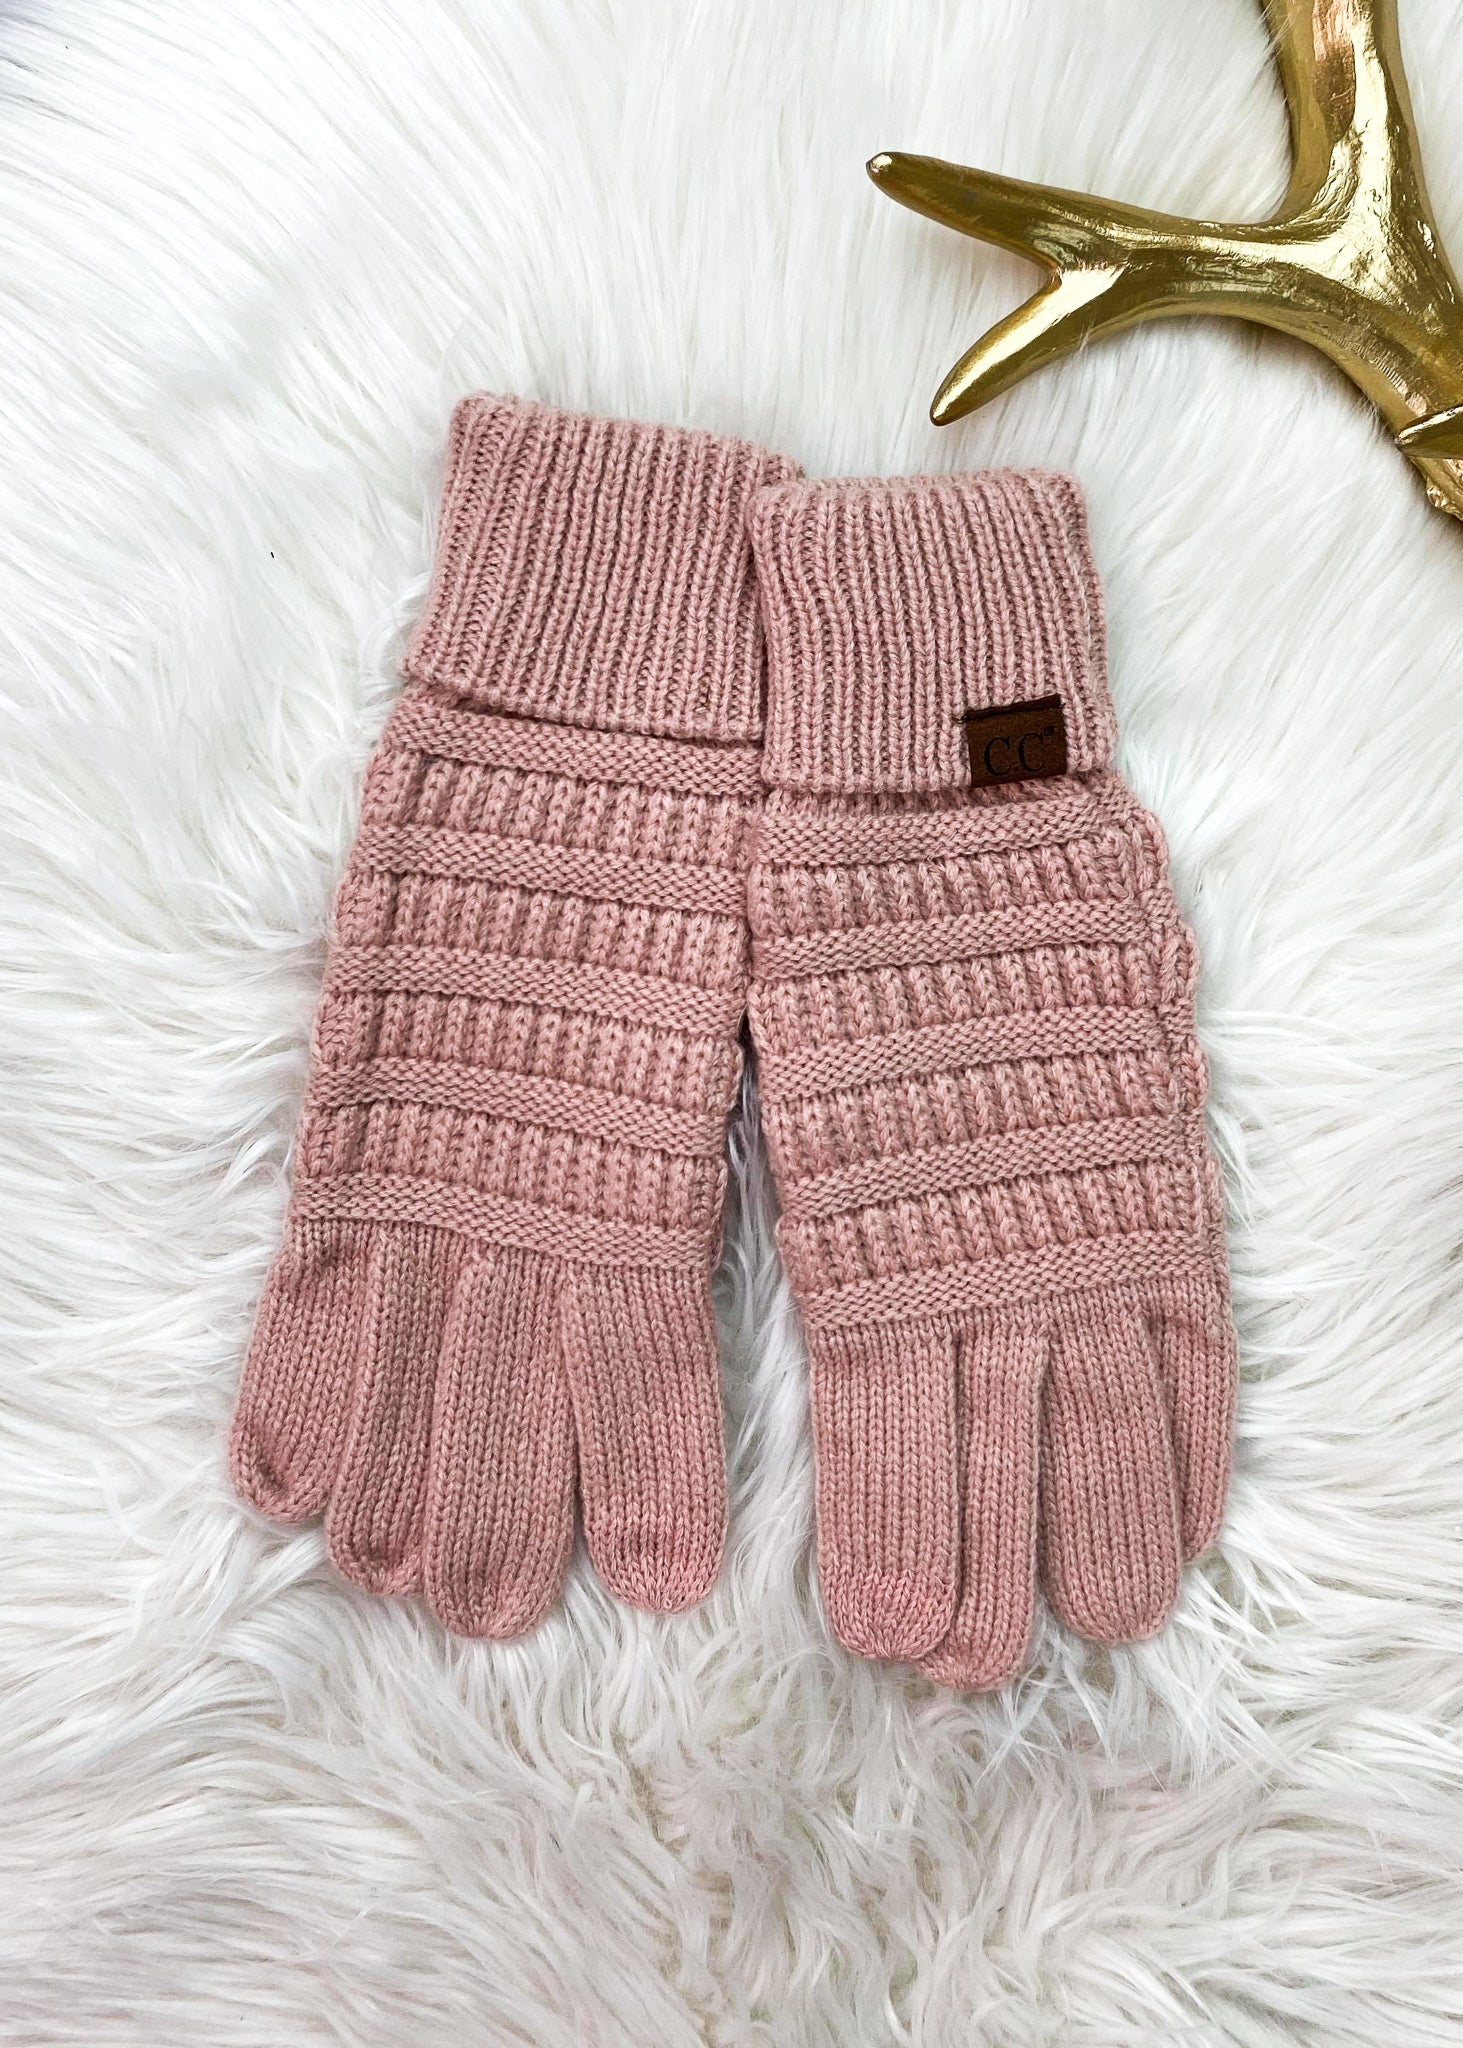 pink knit gloves